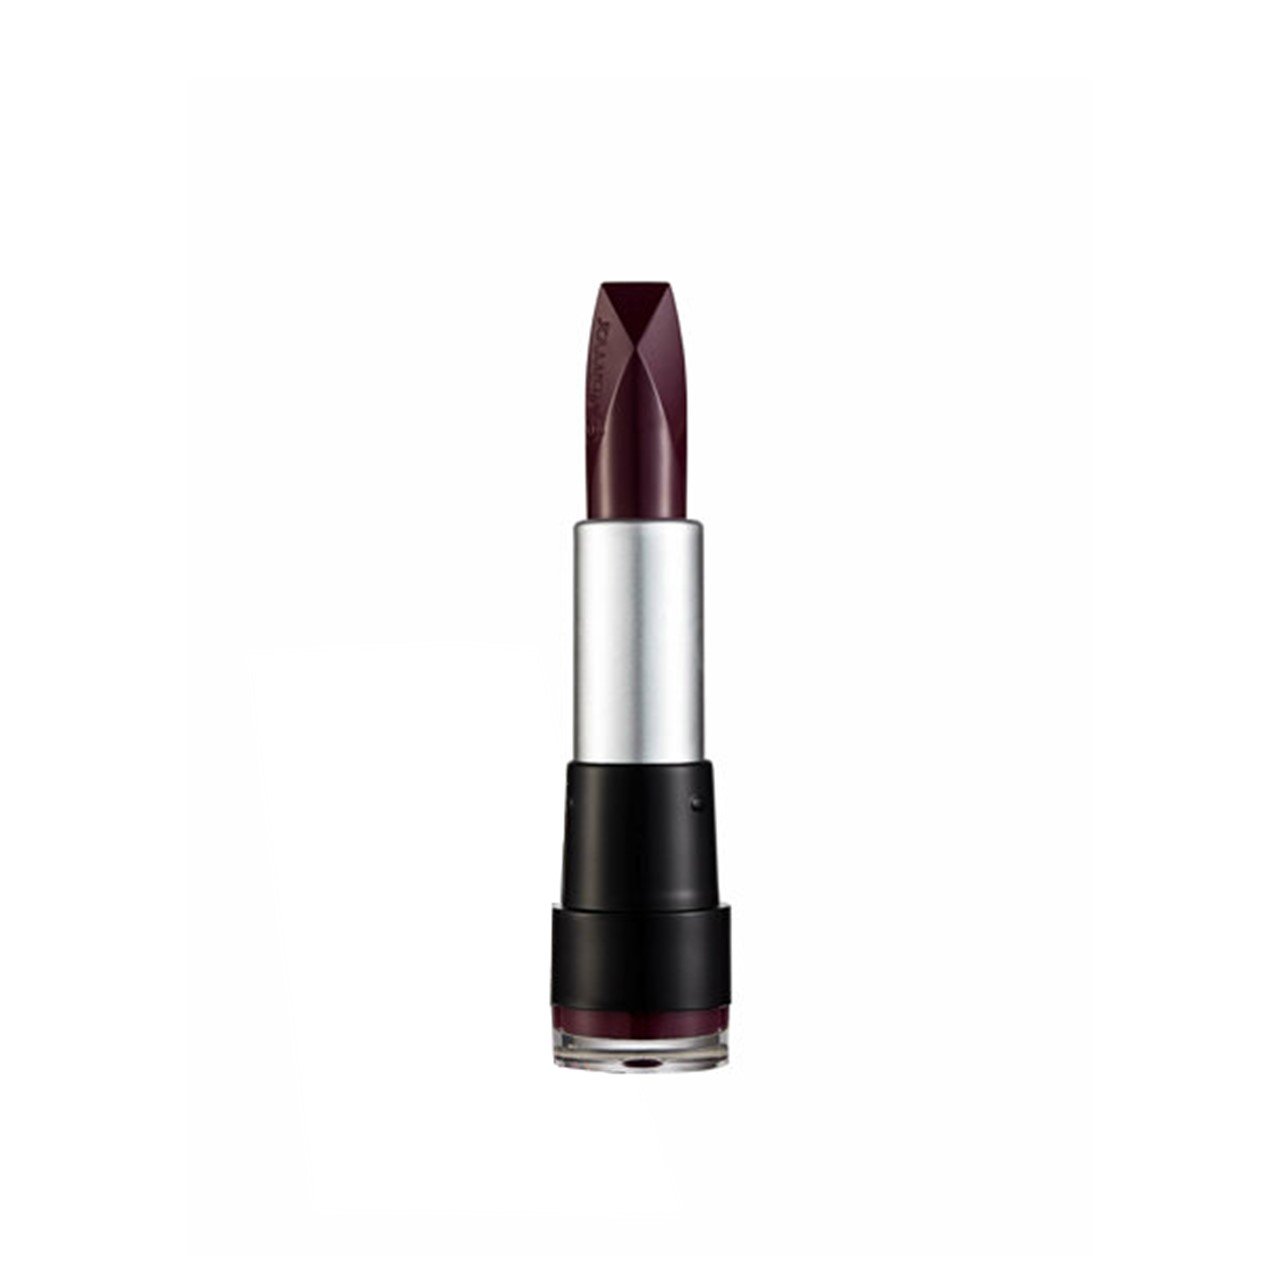 Flormar Extreme Matte Lipstick 14 Chic Violet 4g (0.14oz)